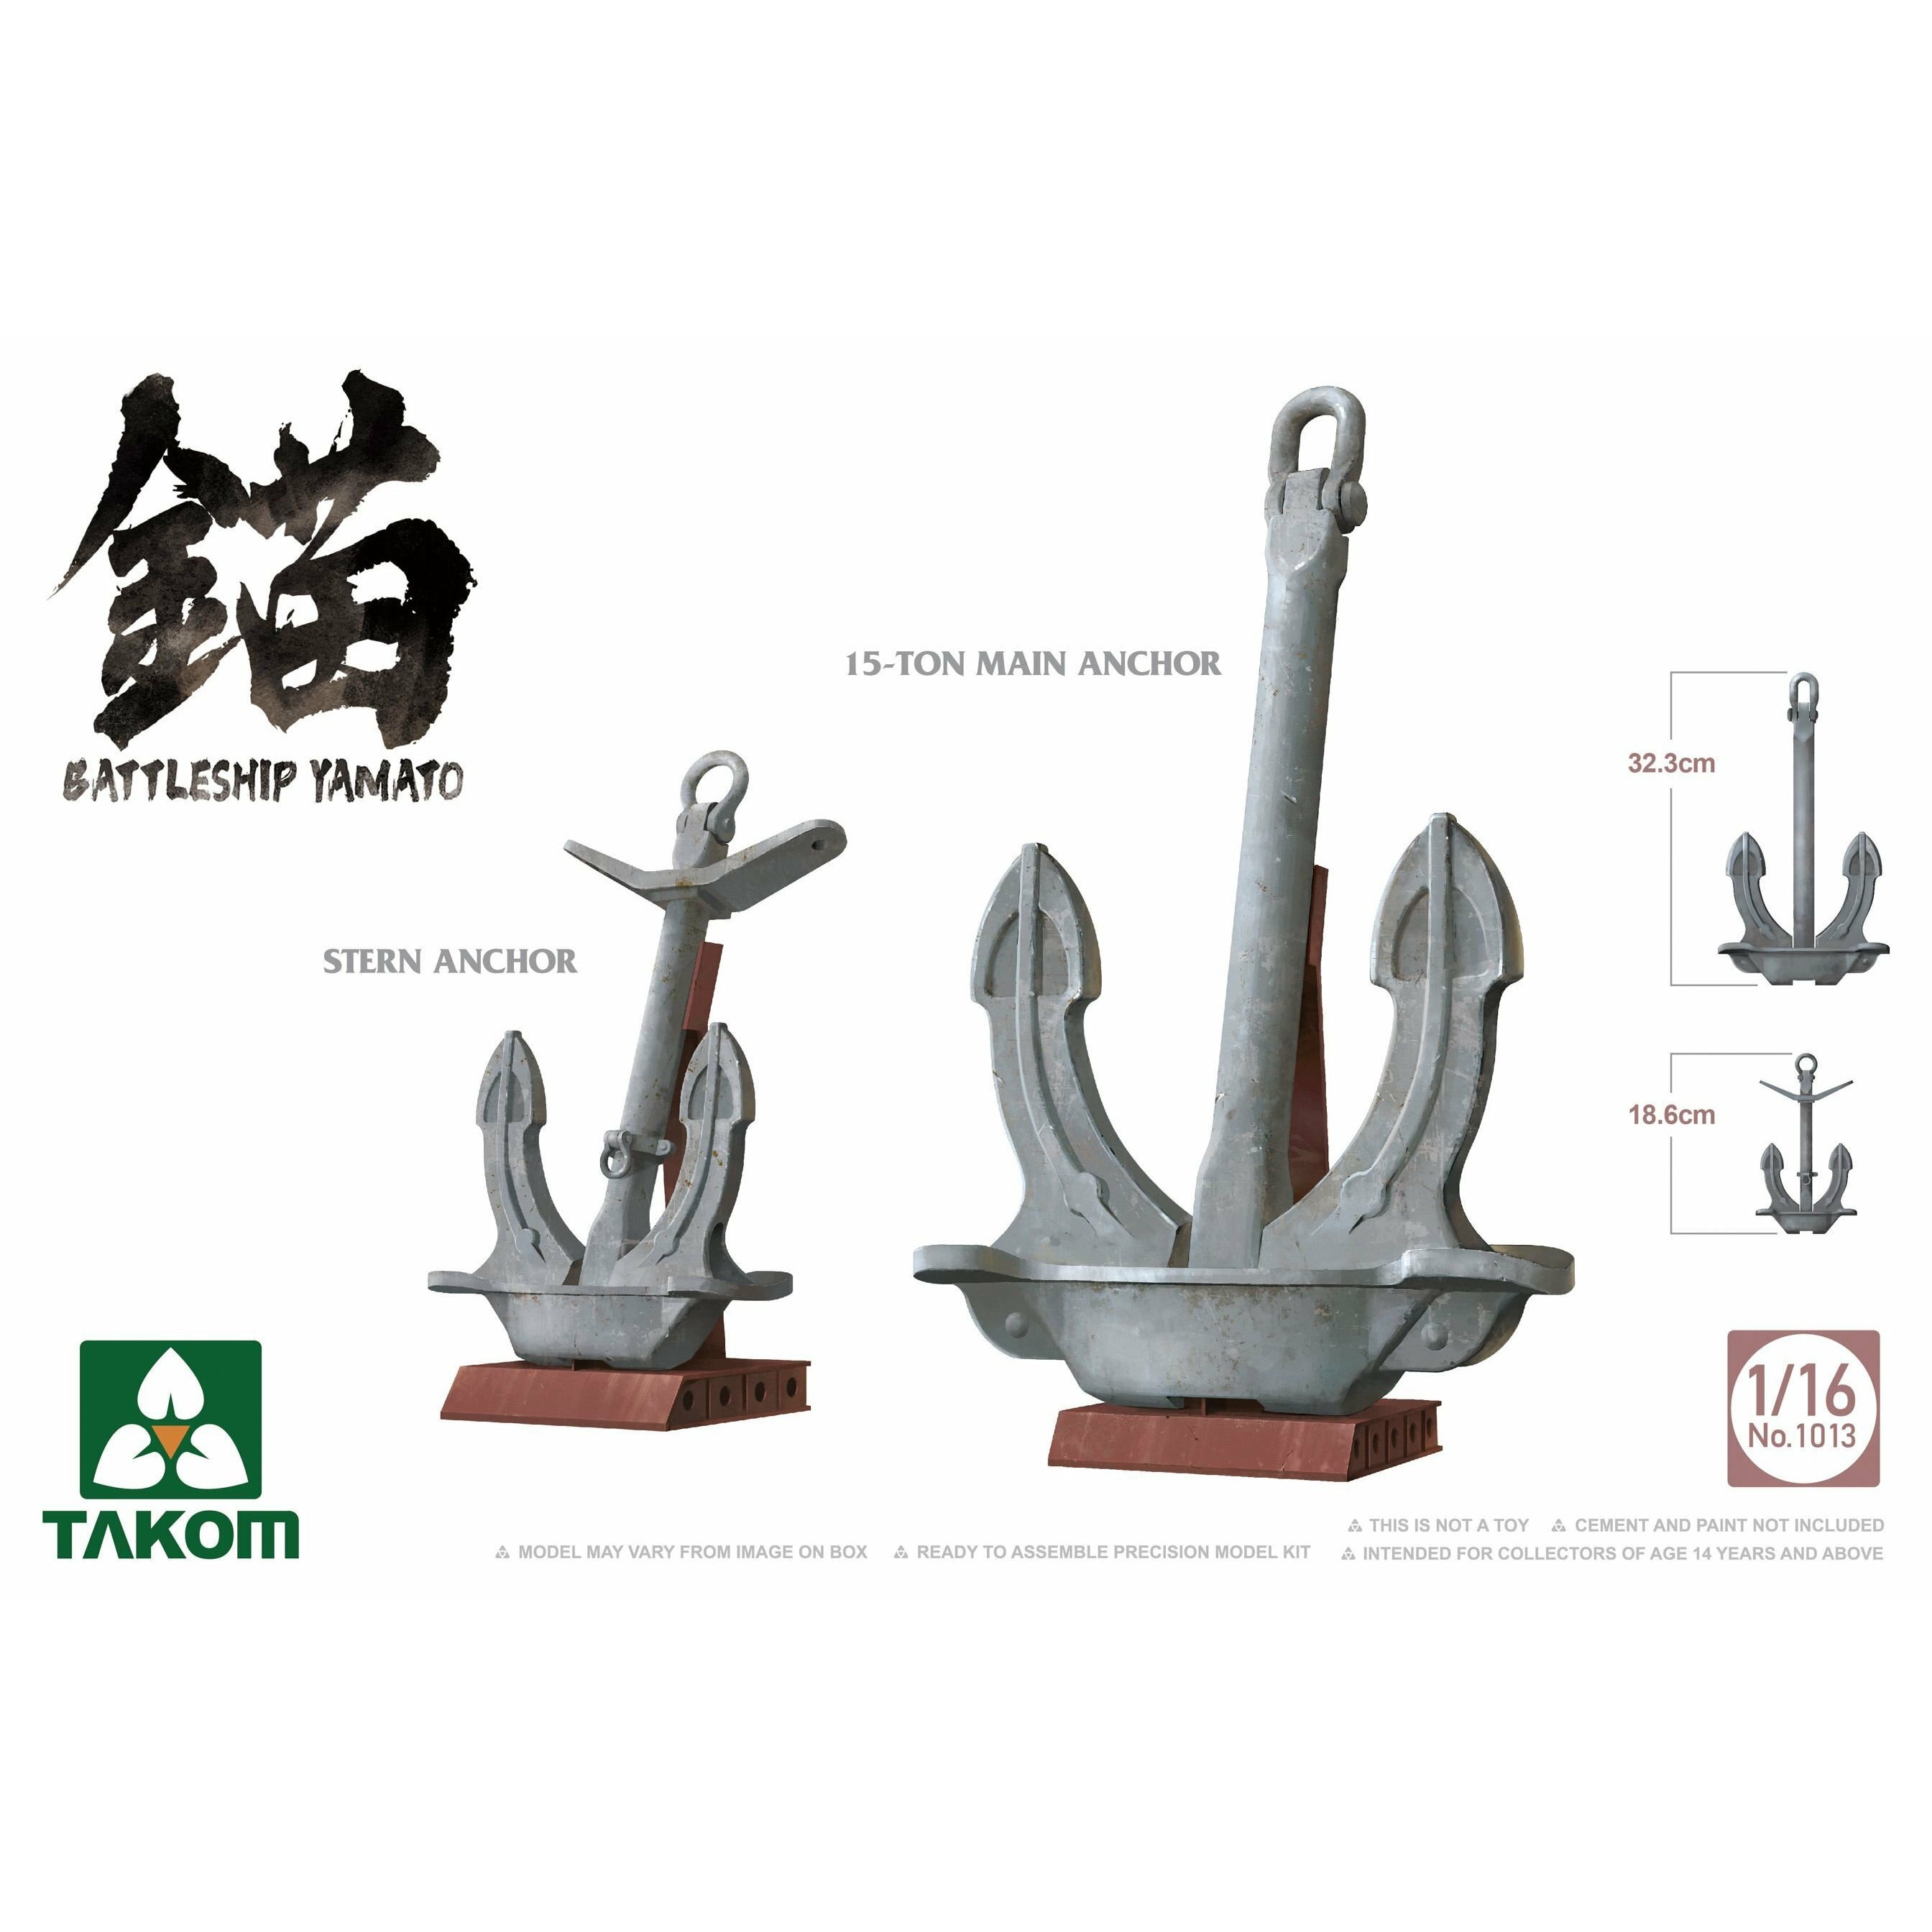 Battleship Yamato Anchor #1013 1/16 Detail Kit by Takom